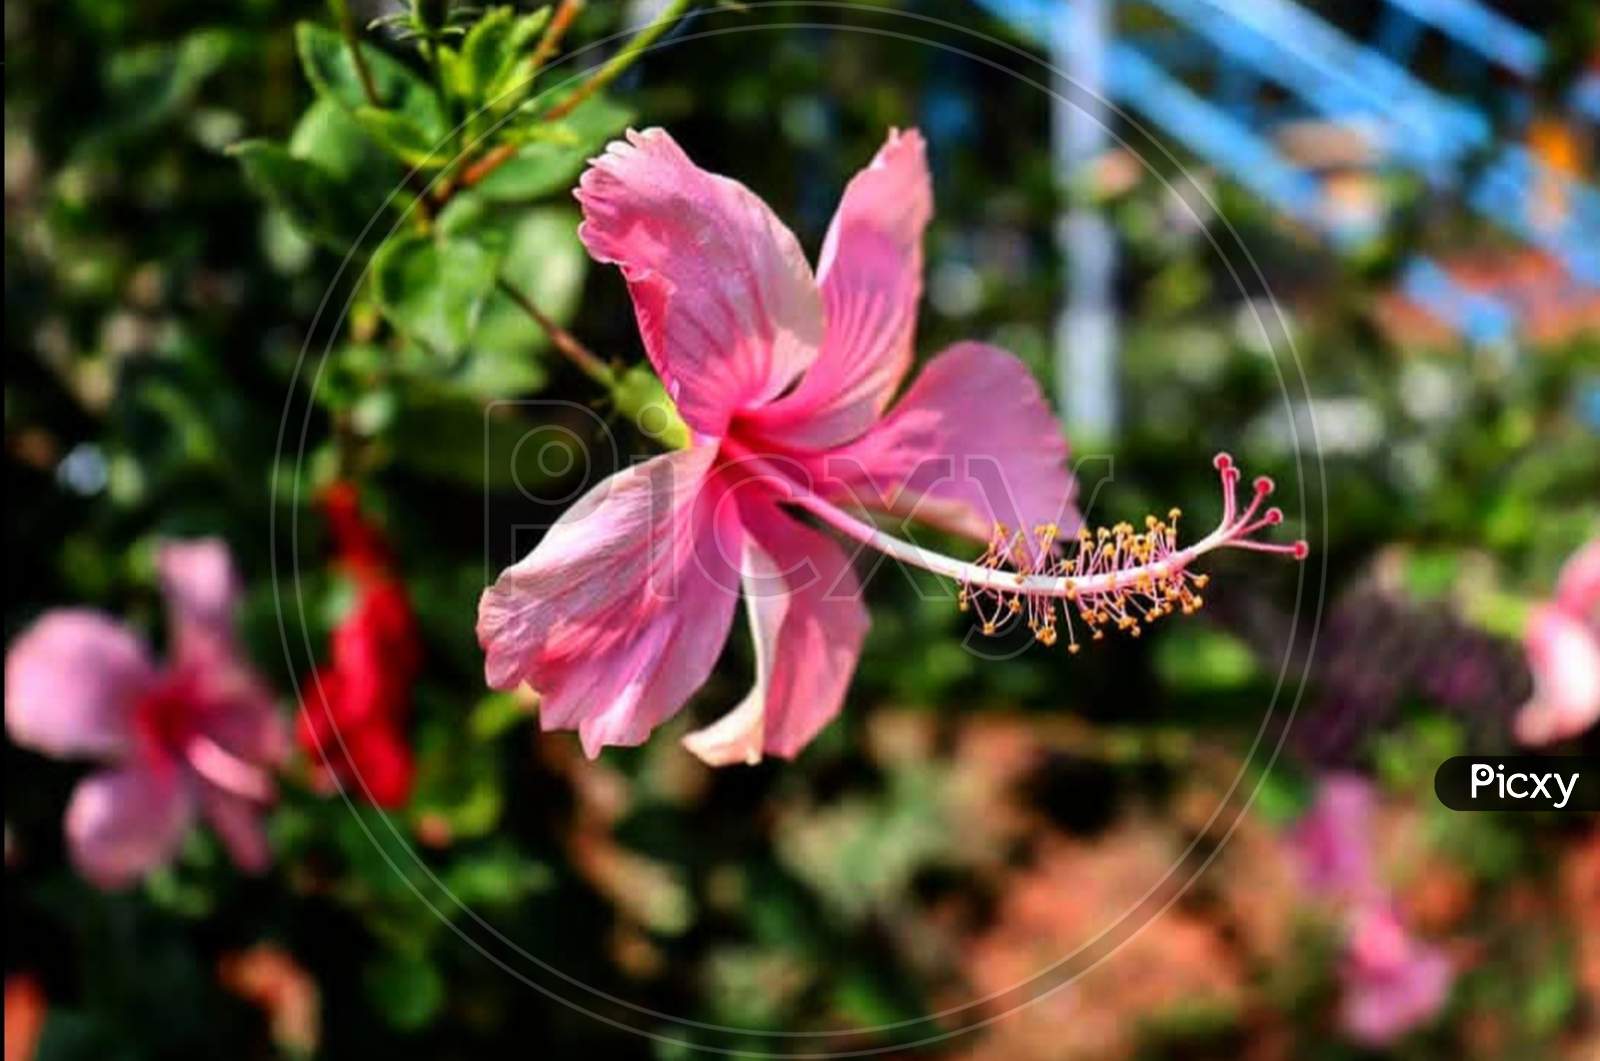 Close-up×Remove  Malvales×Remove  Hibiscus×Remove  Honeysuckle×Remove  Pink×Remove  Flowering plant×Remove  Plant×Remove  Flower×Remove  Petal×Remove  Mallow family